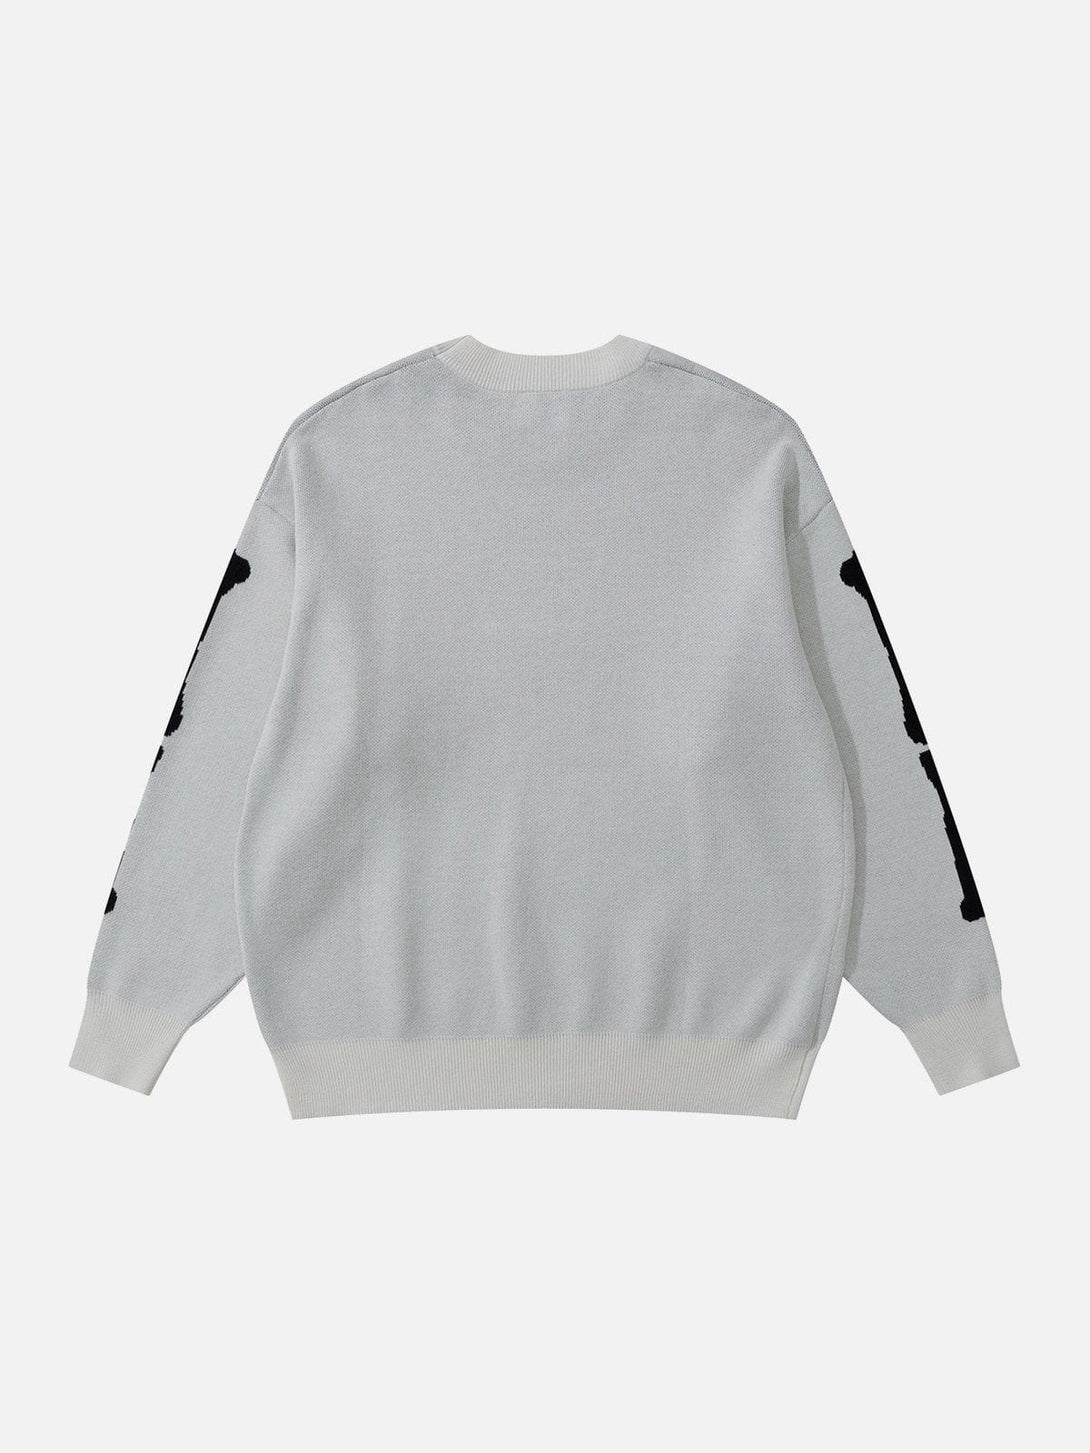 Majesda® - Spider Jacquard Sweater outfit ideas streetwear fashion